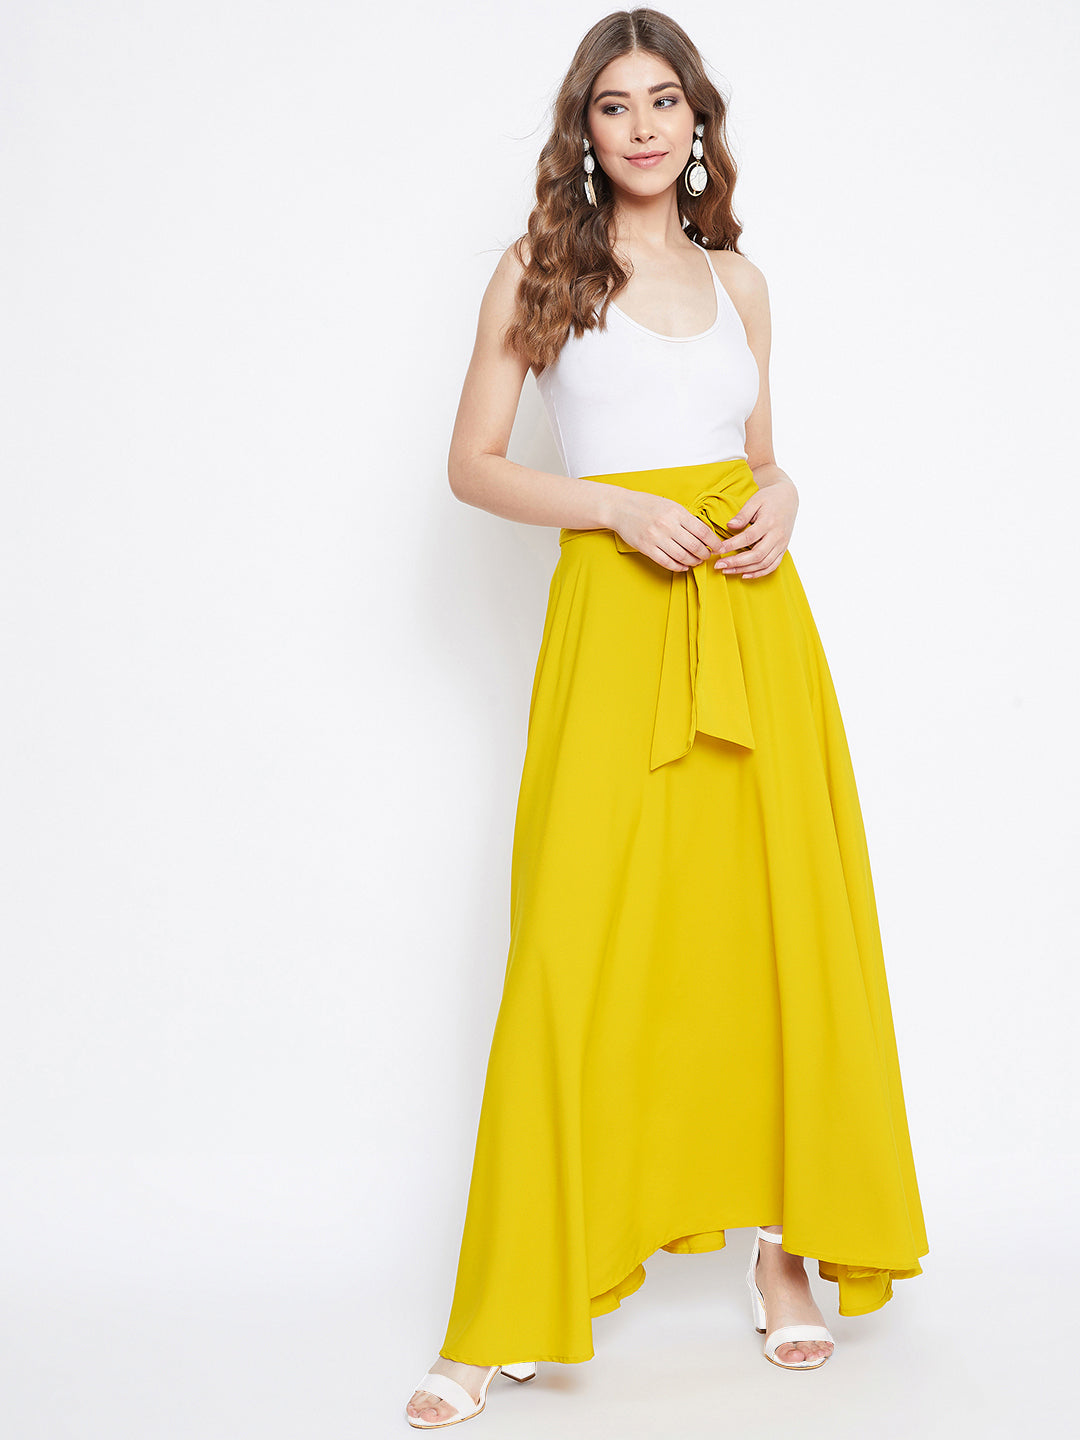 Berrylush Women Solid Yellow Waist Bow Tie-Up Pleated Maxi Skirt